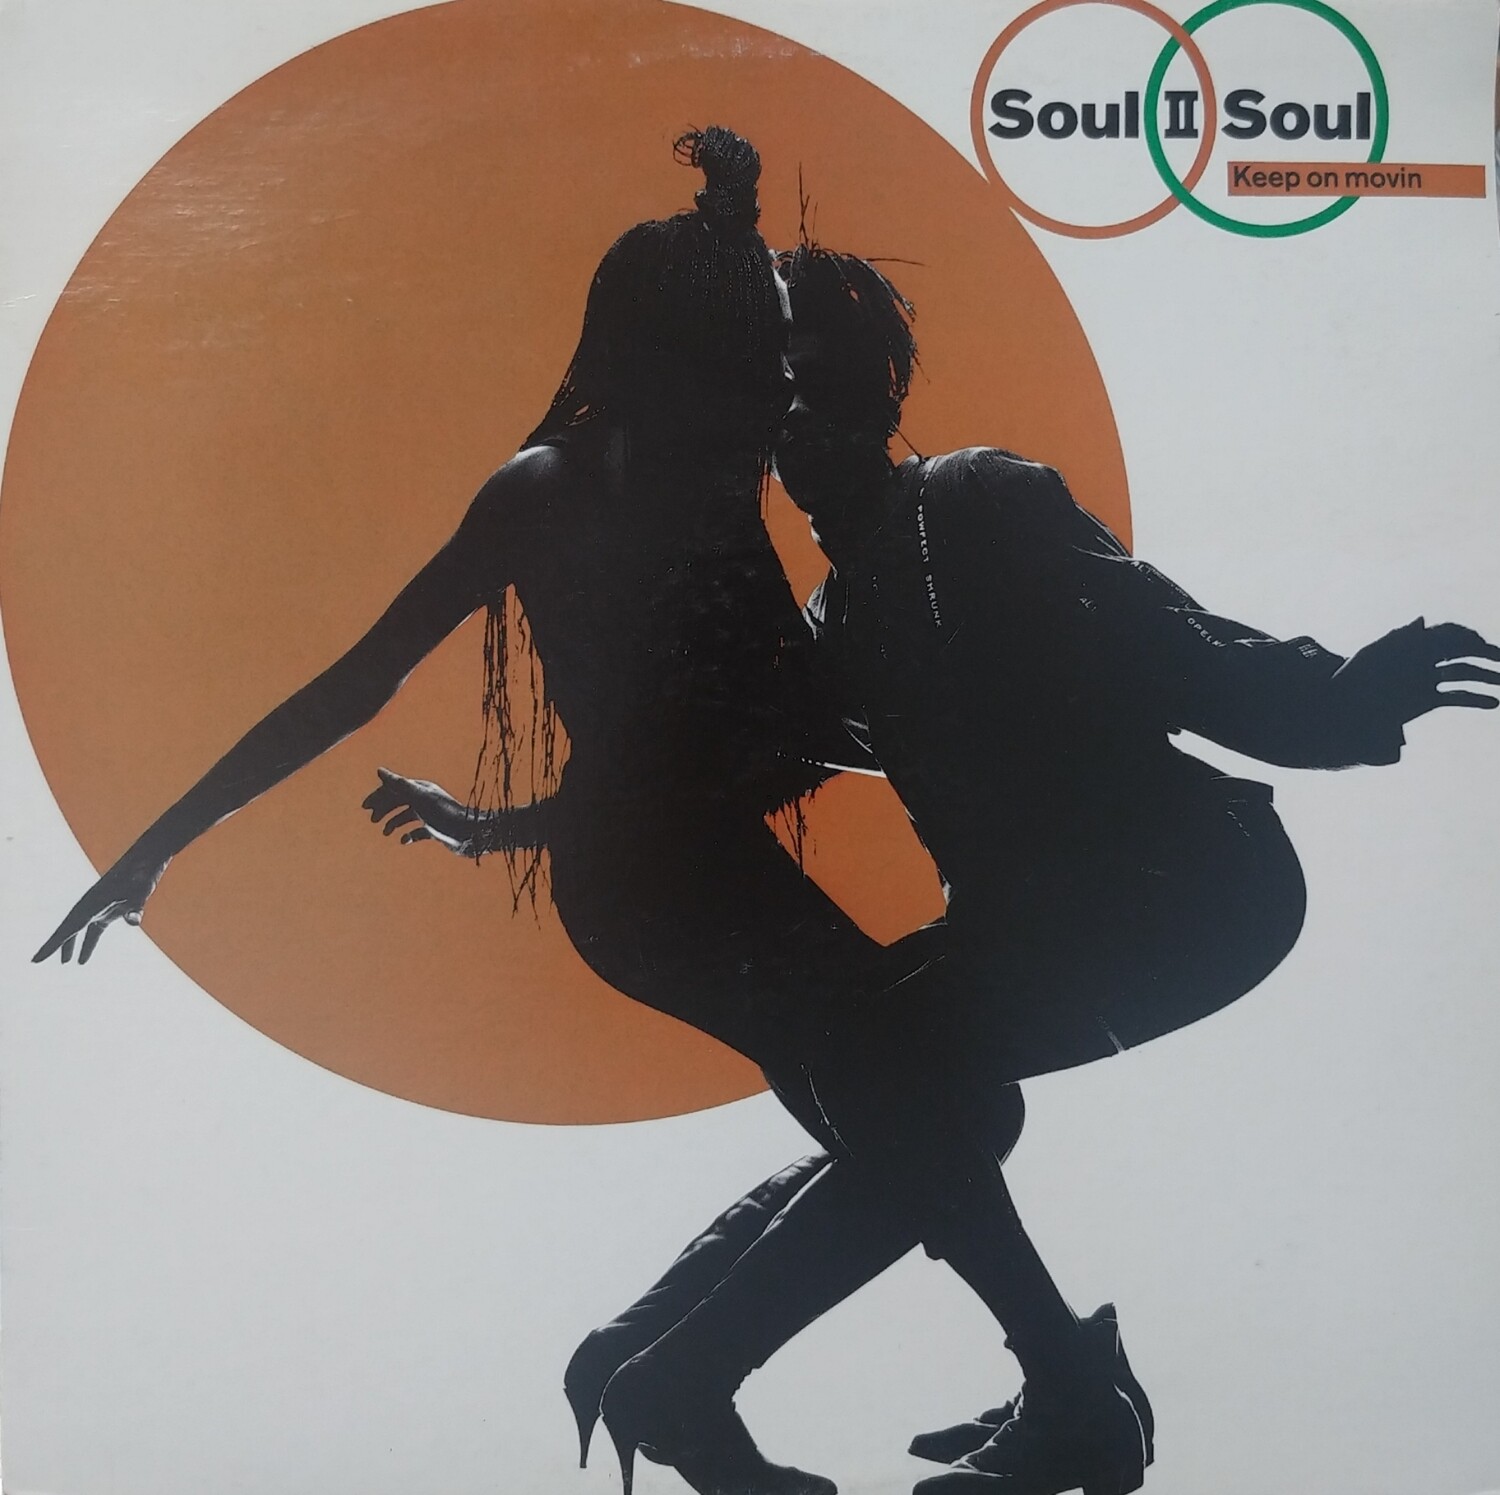 Soul II Soul - Keep on movin